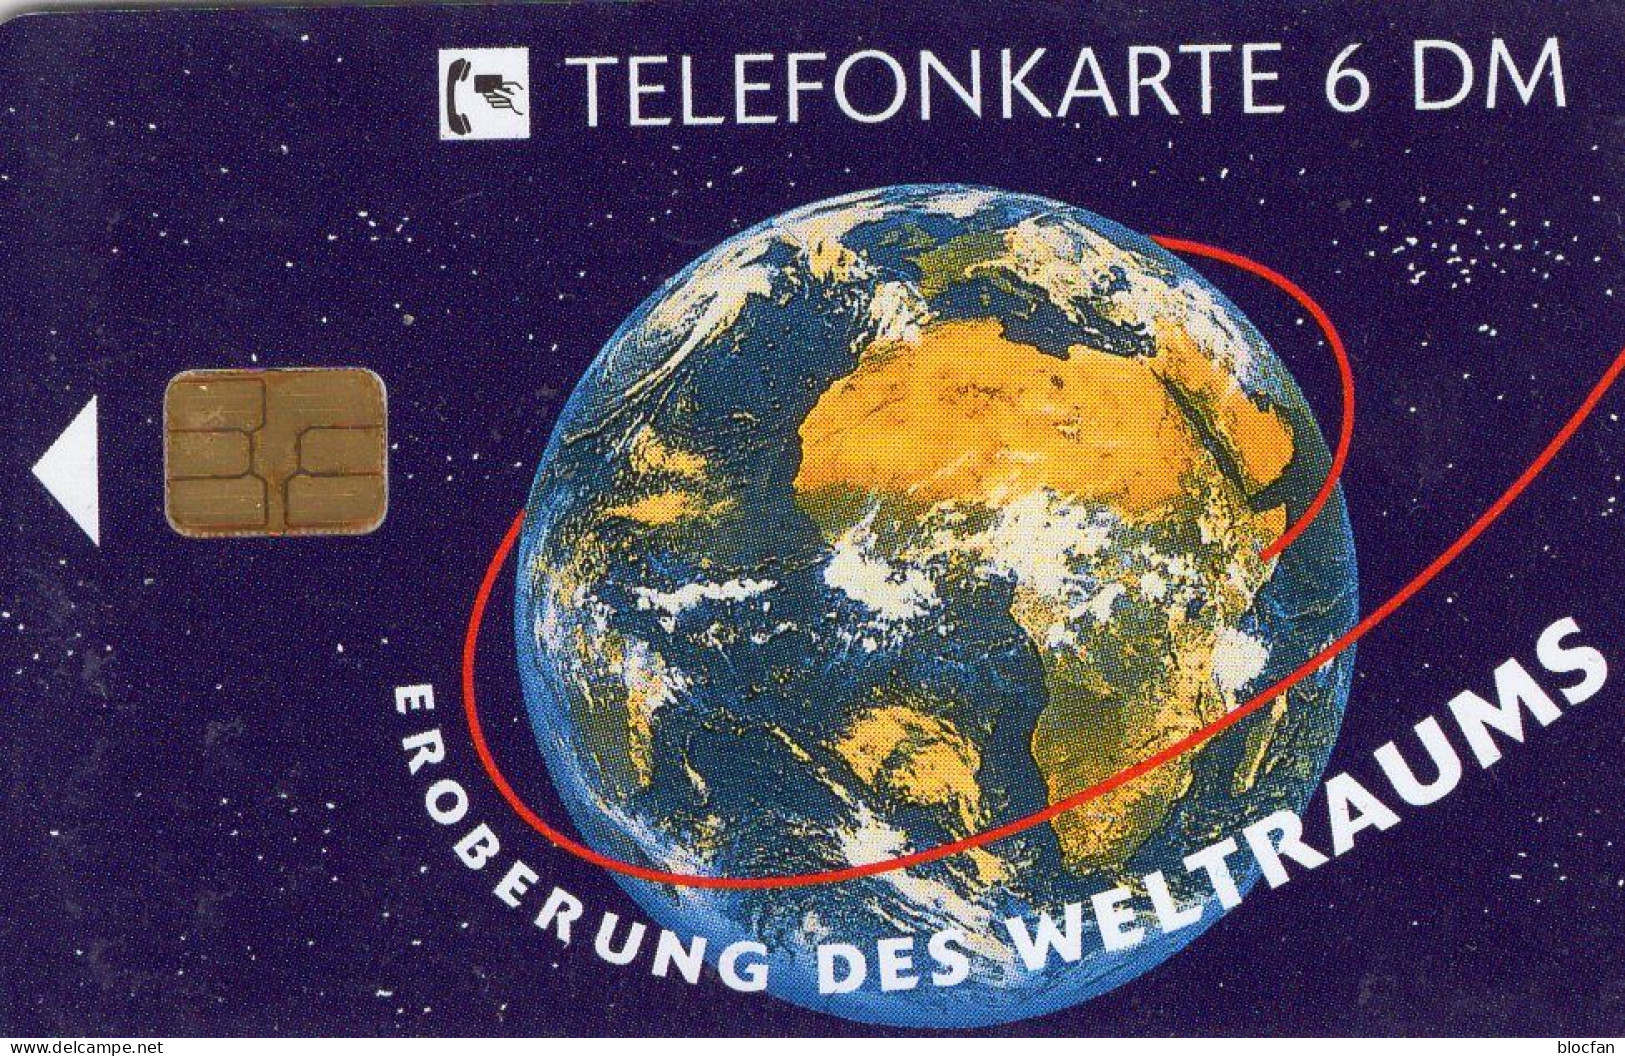 Space Center TK O 1164/1995 ** 25€ 1.000Expl. Weltraum-Programm US Raumflug Aus Cap Kennedy TC NASA Phonecard Of Germany - Espace